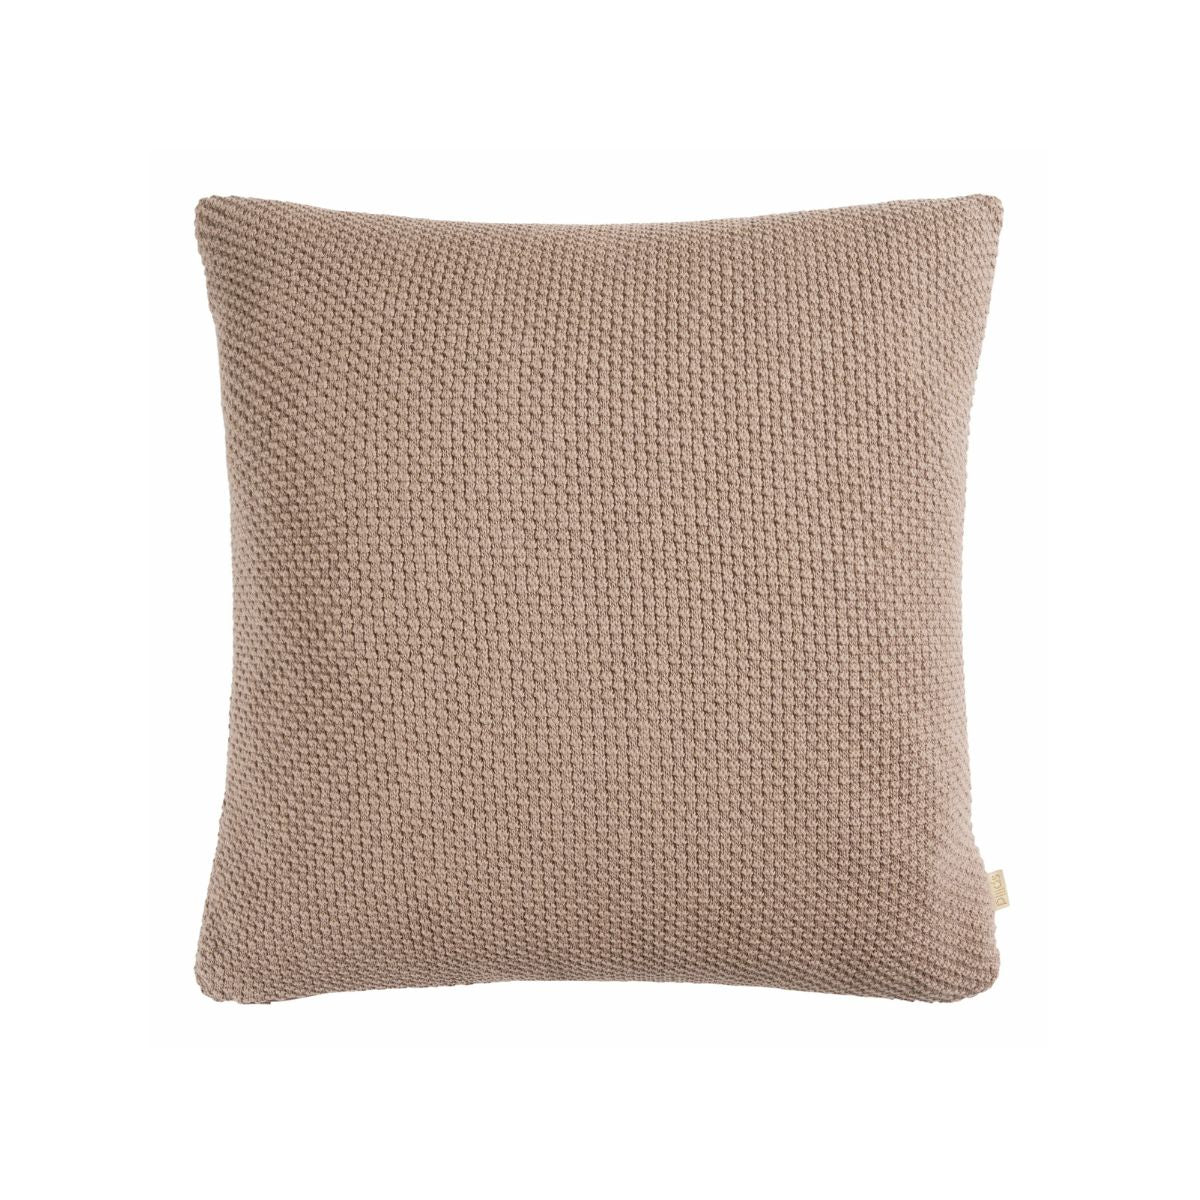 Nora - Earth colored cushion 